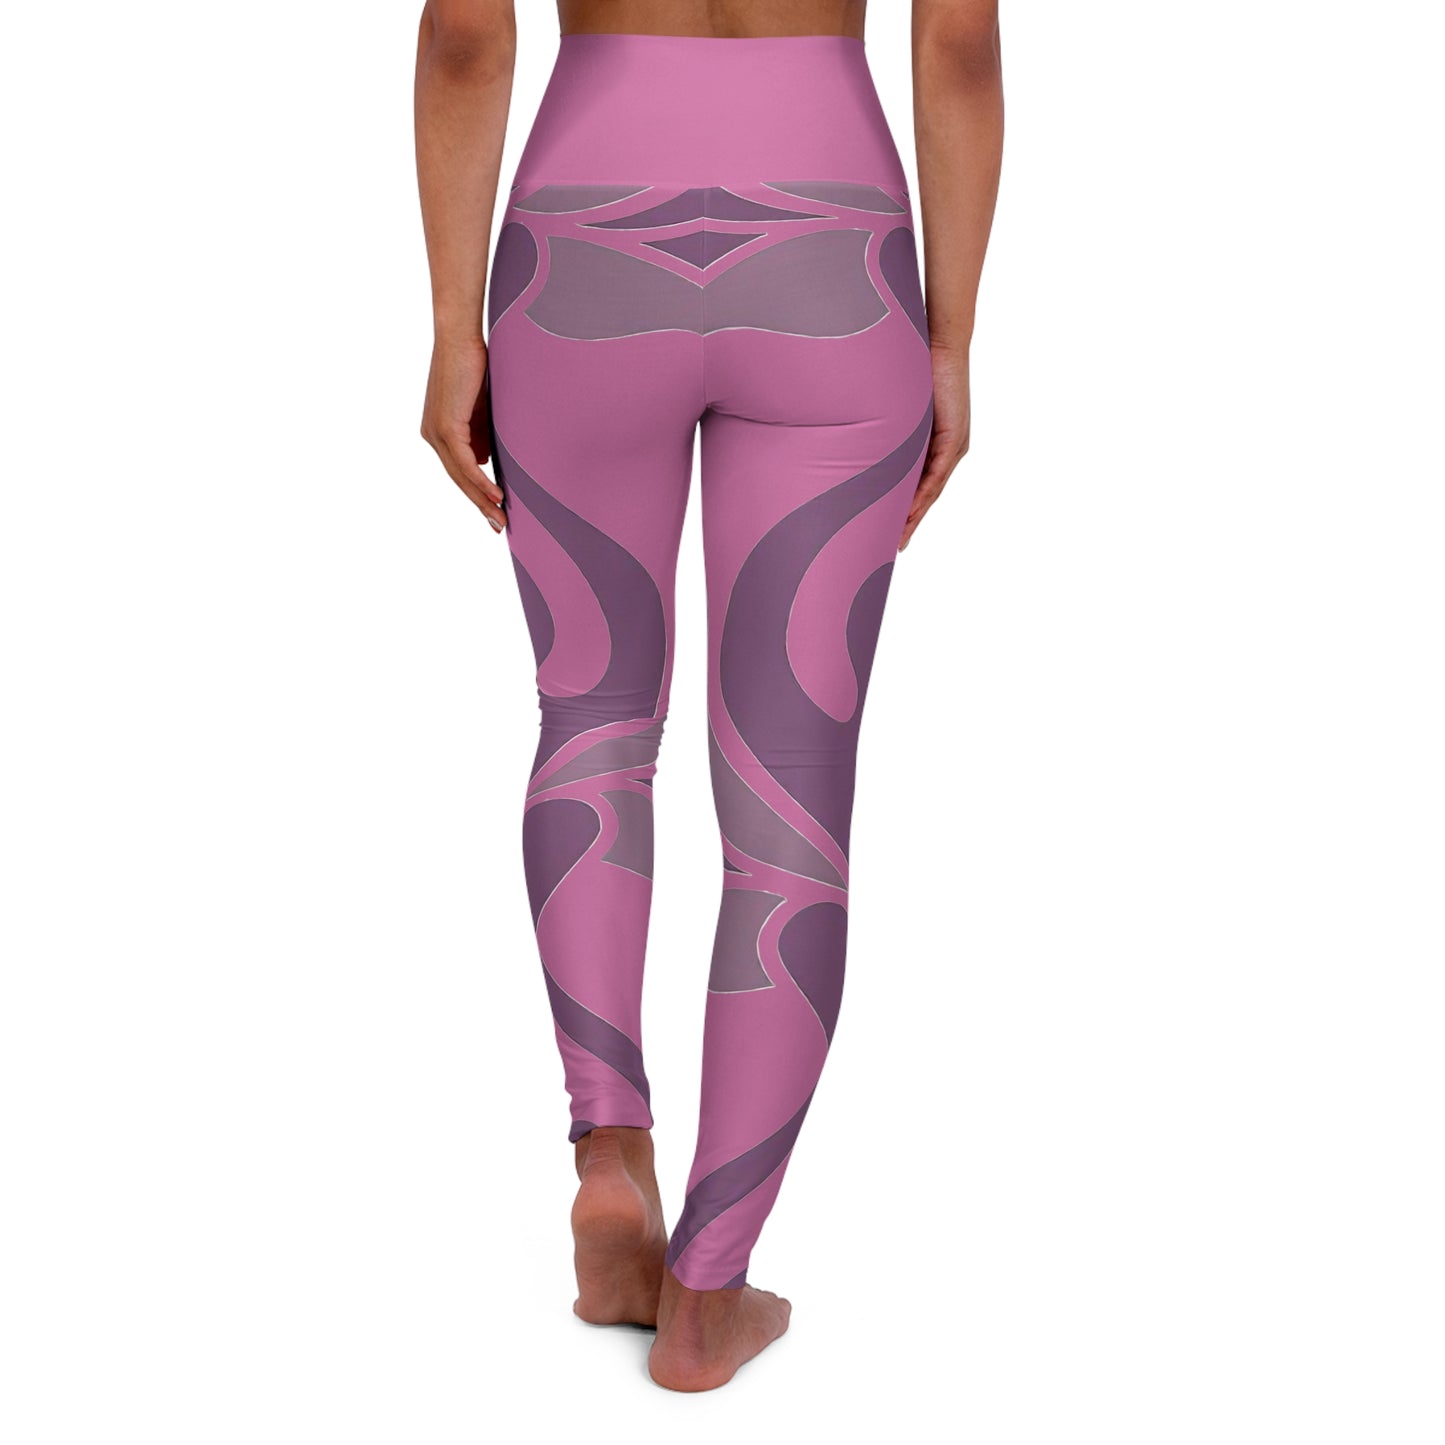 High Waisted Yoga Healing Leggings (pink)